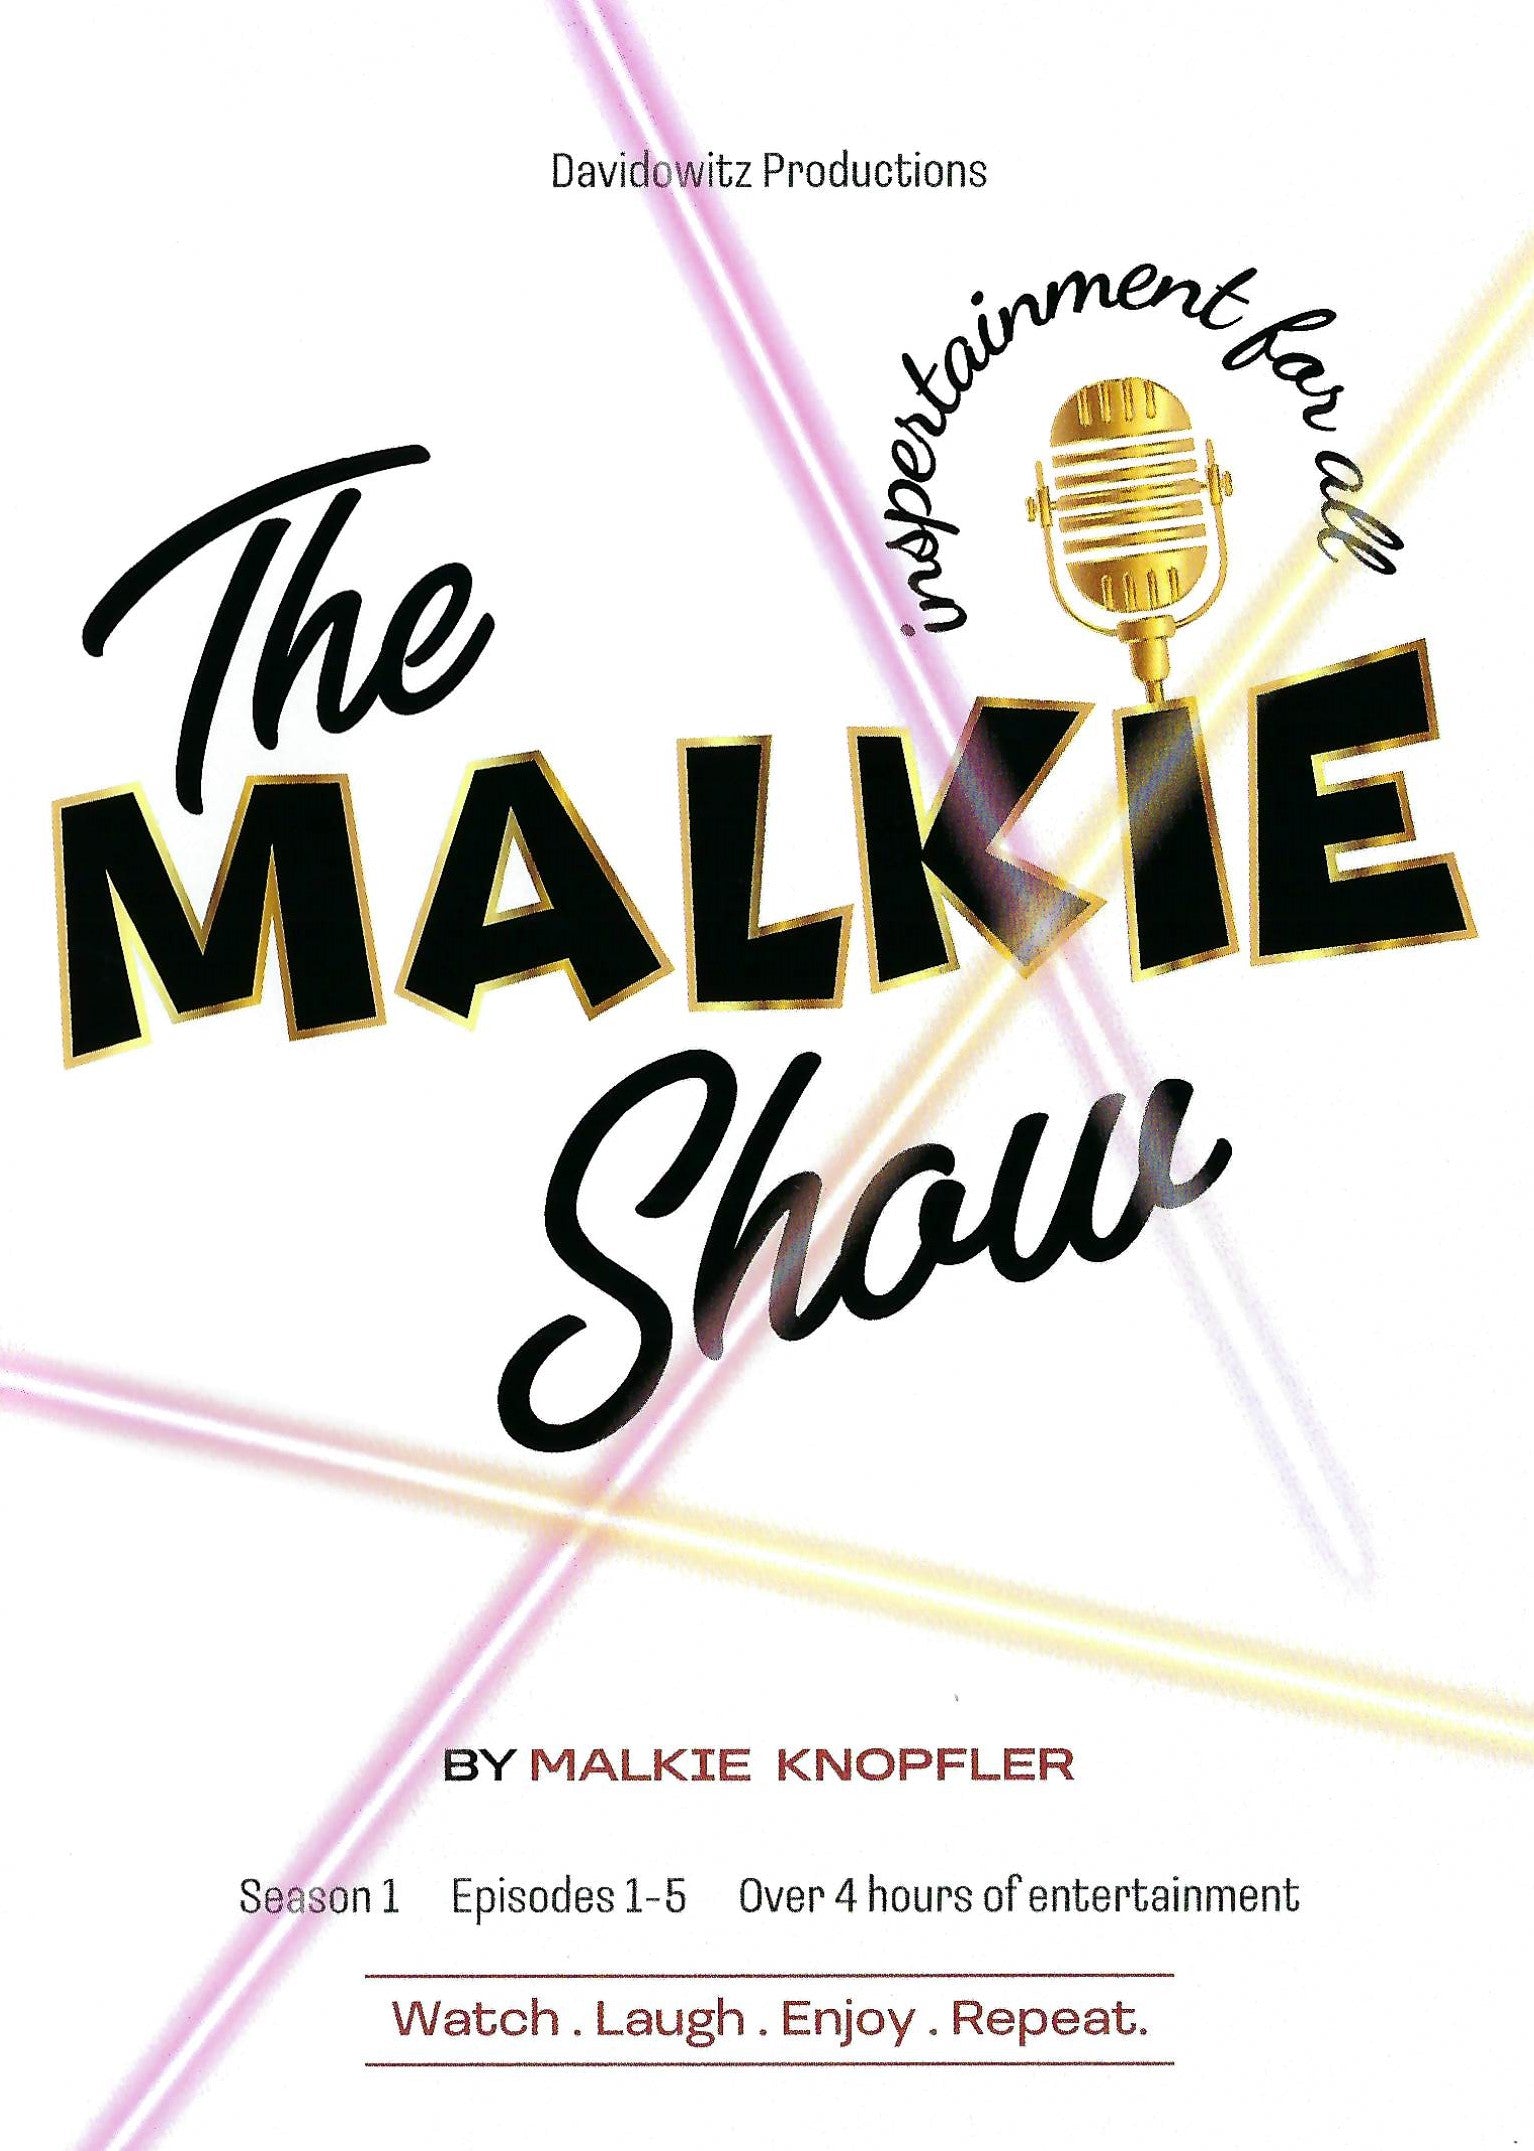 Malkie Knopfler - The Malkie Show (Video)